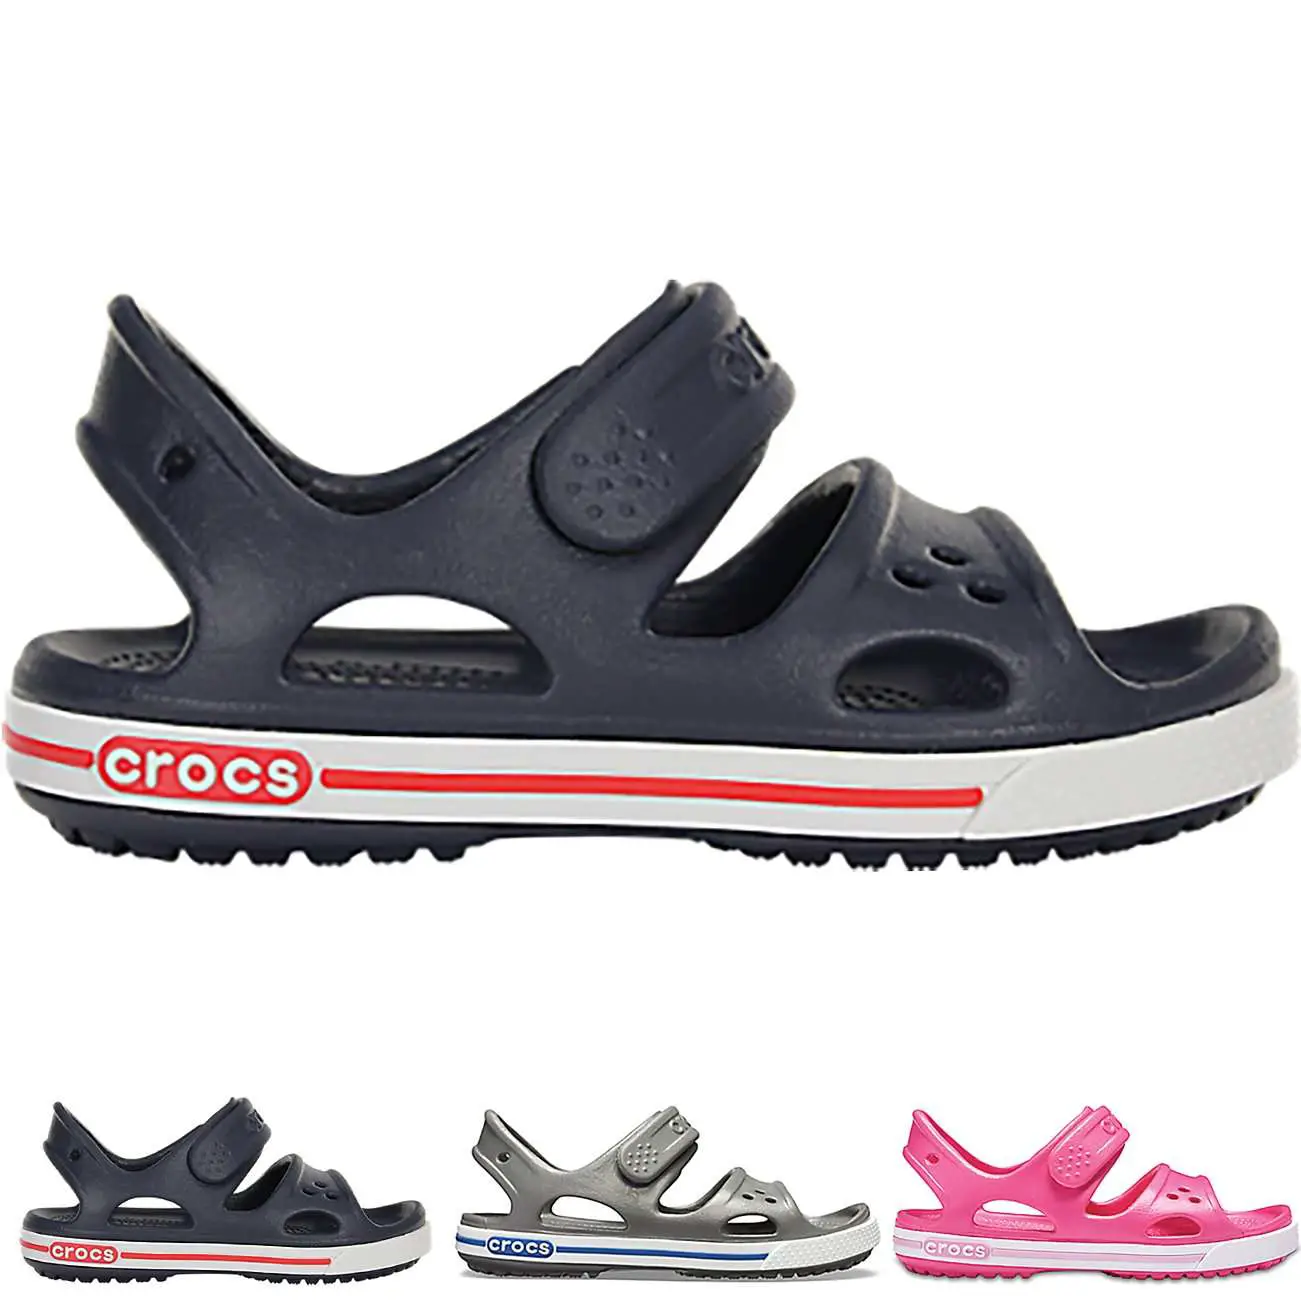 Unisex Kids Crocs Crocband II Sandal Holiday Summer ...